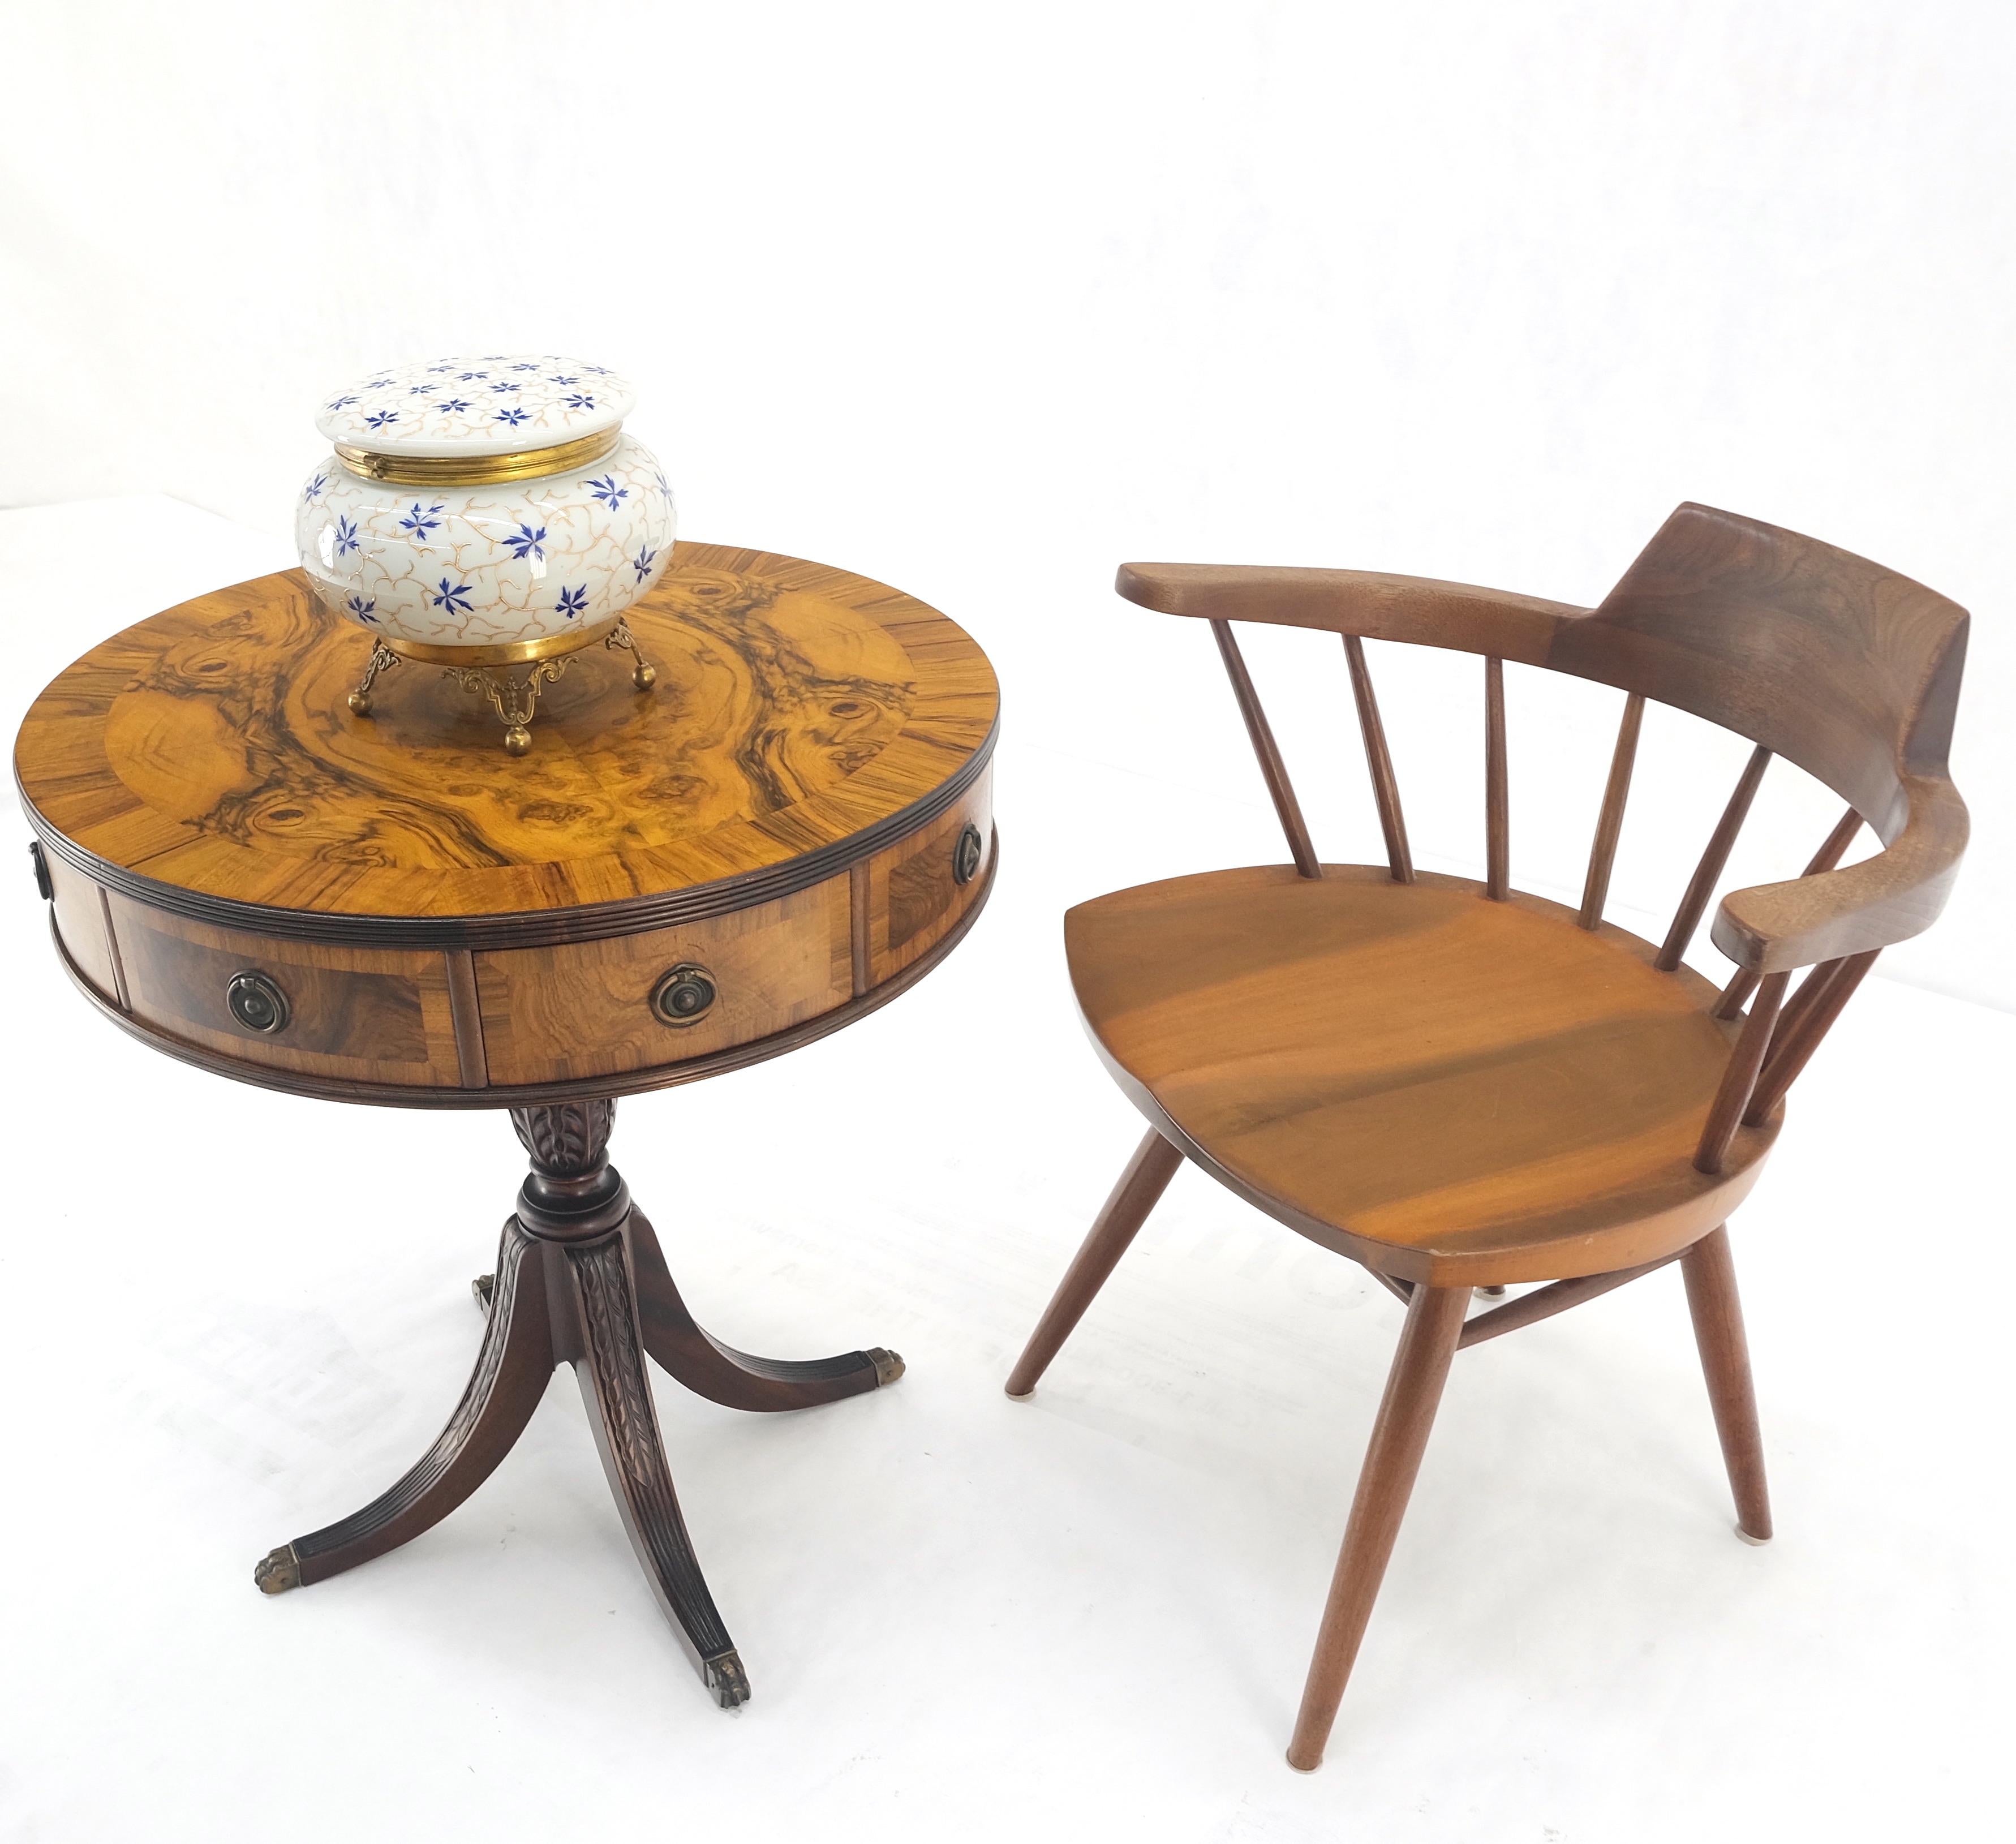 Walnut Round Drum Center Side Table Stand w/ Drawers Johnson Furniture Mint!
Amazing burl walnut wood pattern top!